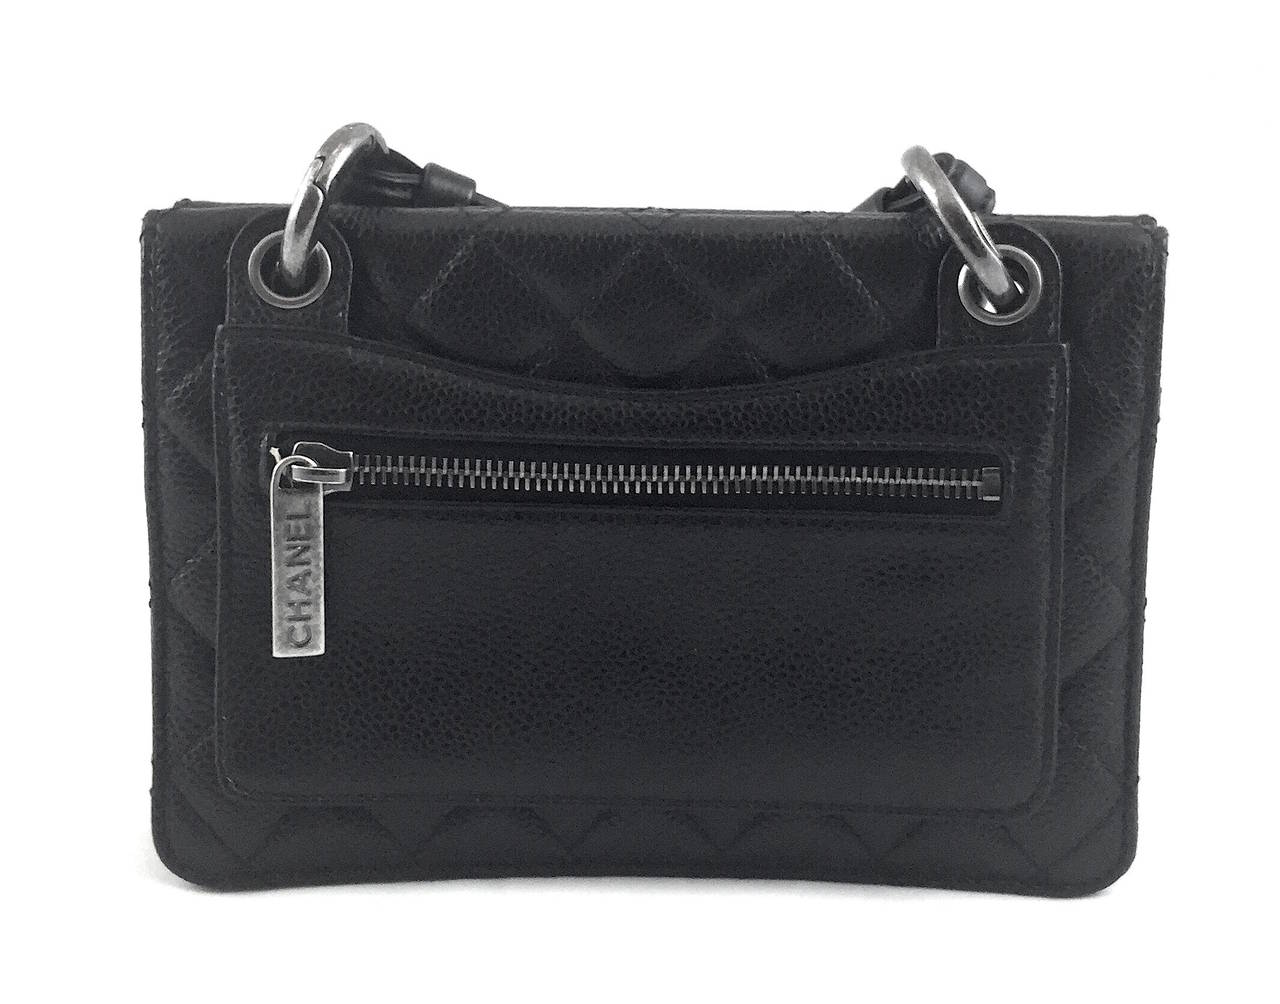 Chanel Black Caviar Retro Flap Shoulder Bag, 2014/15 Fall Winter Collection 2